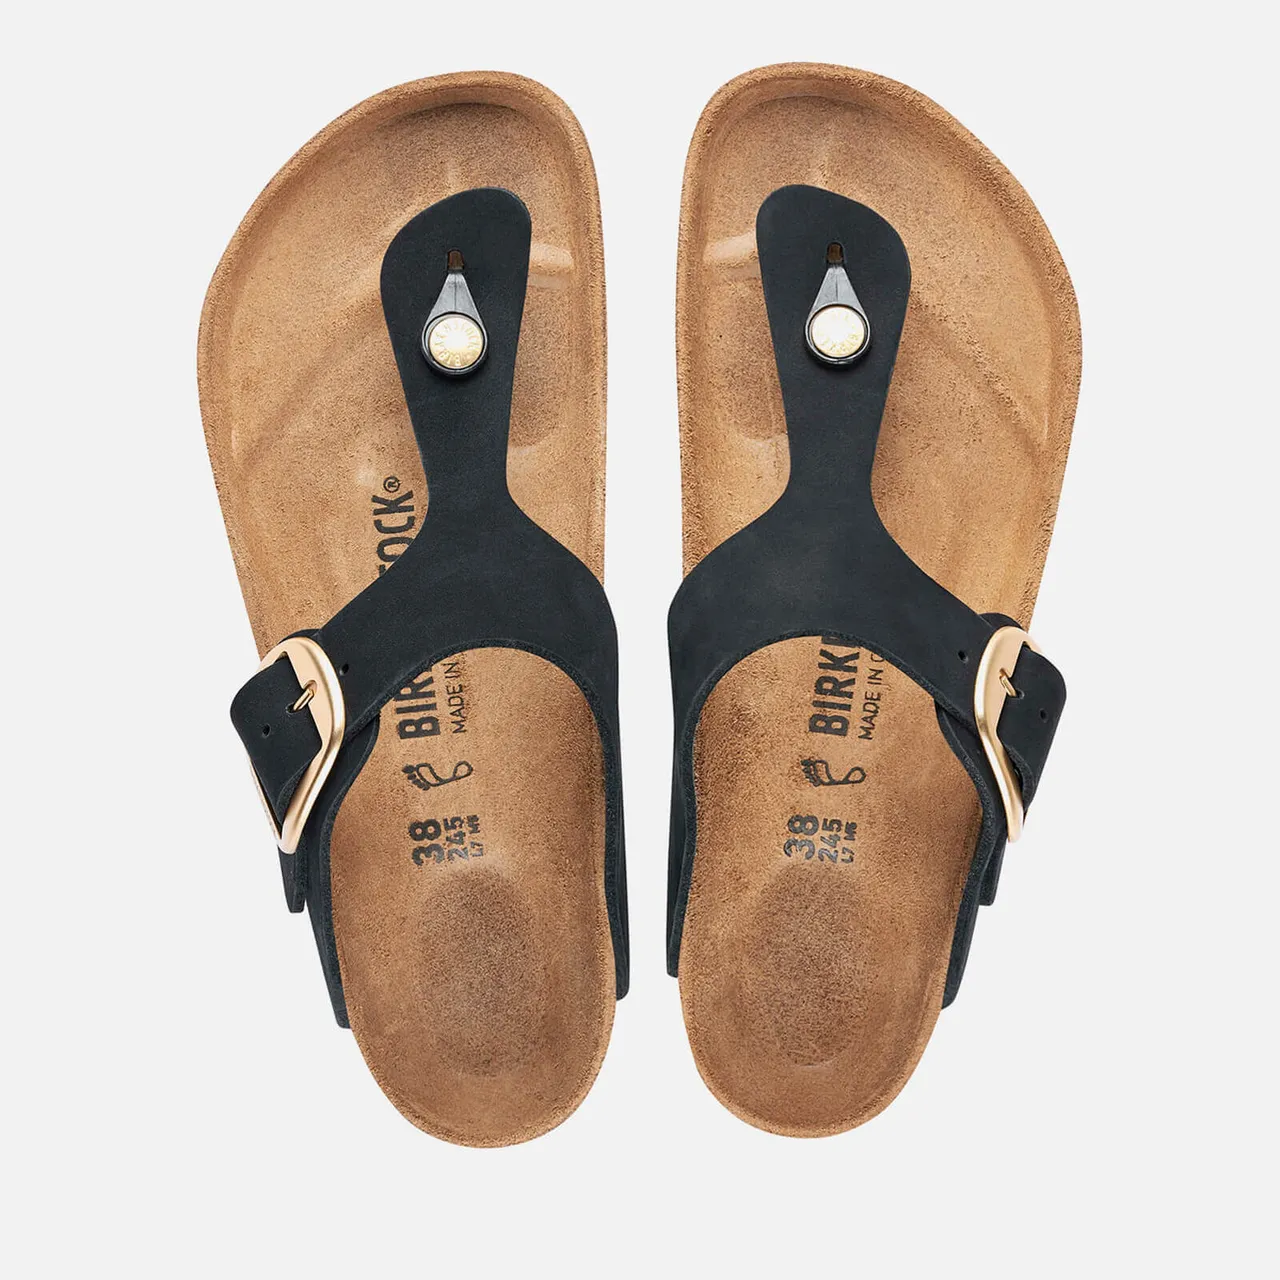 Birkenstock Women's Nubuck Narrow-Fit Leather Toe Sandals